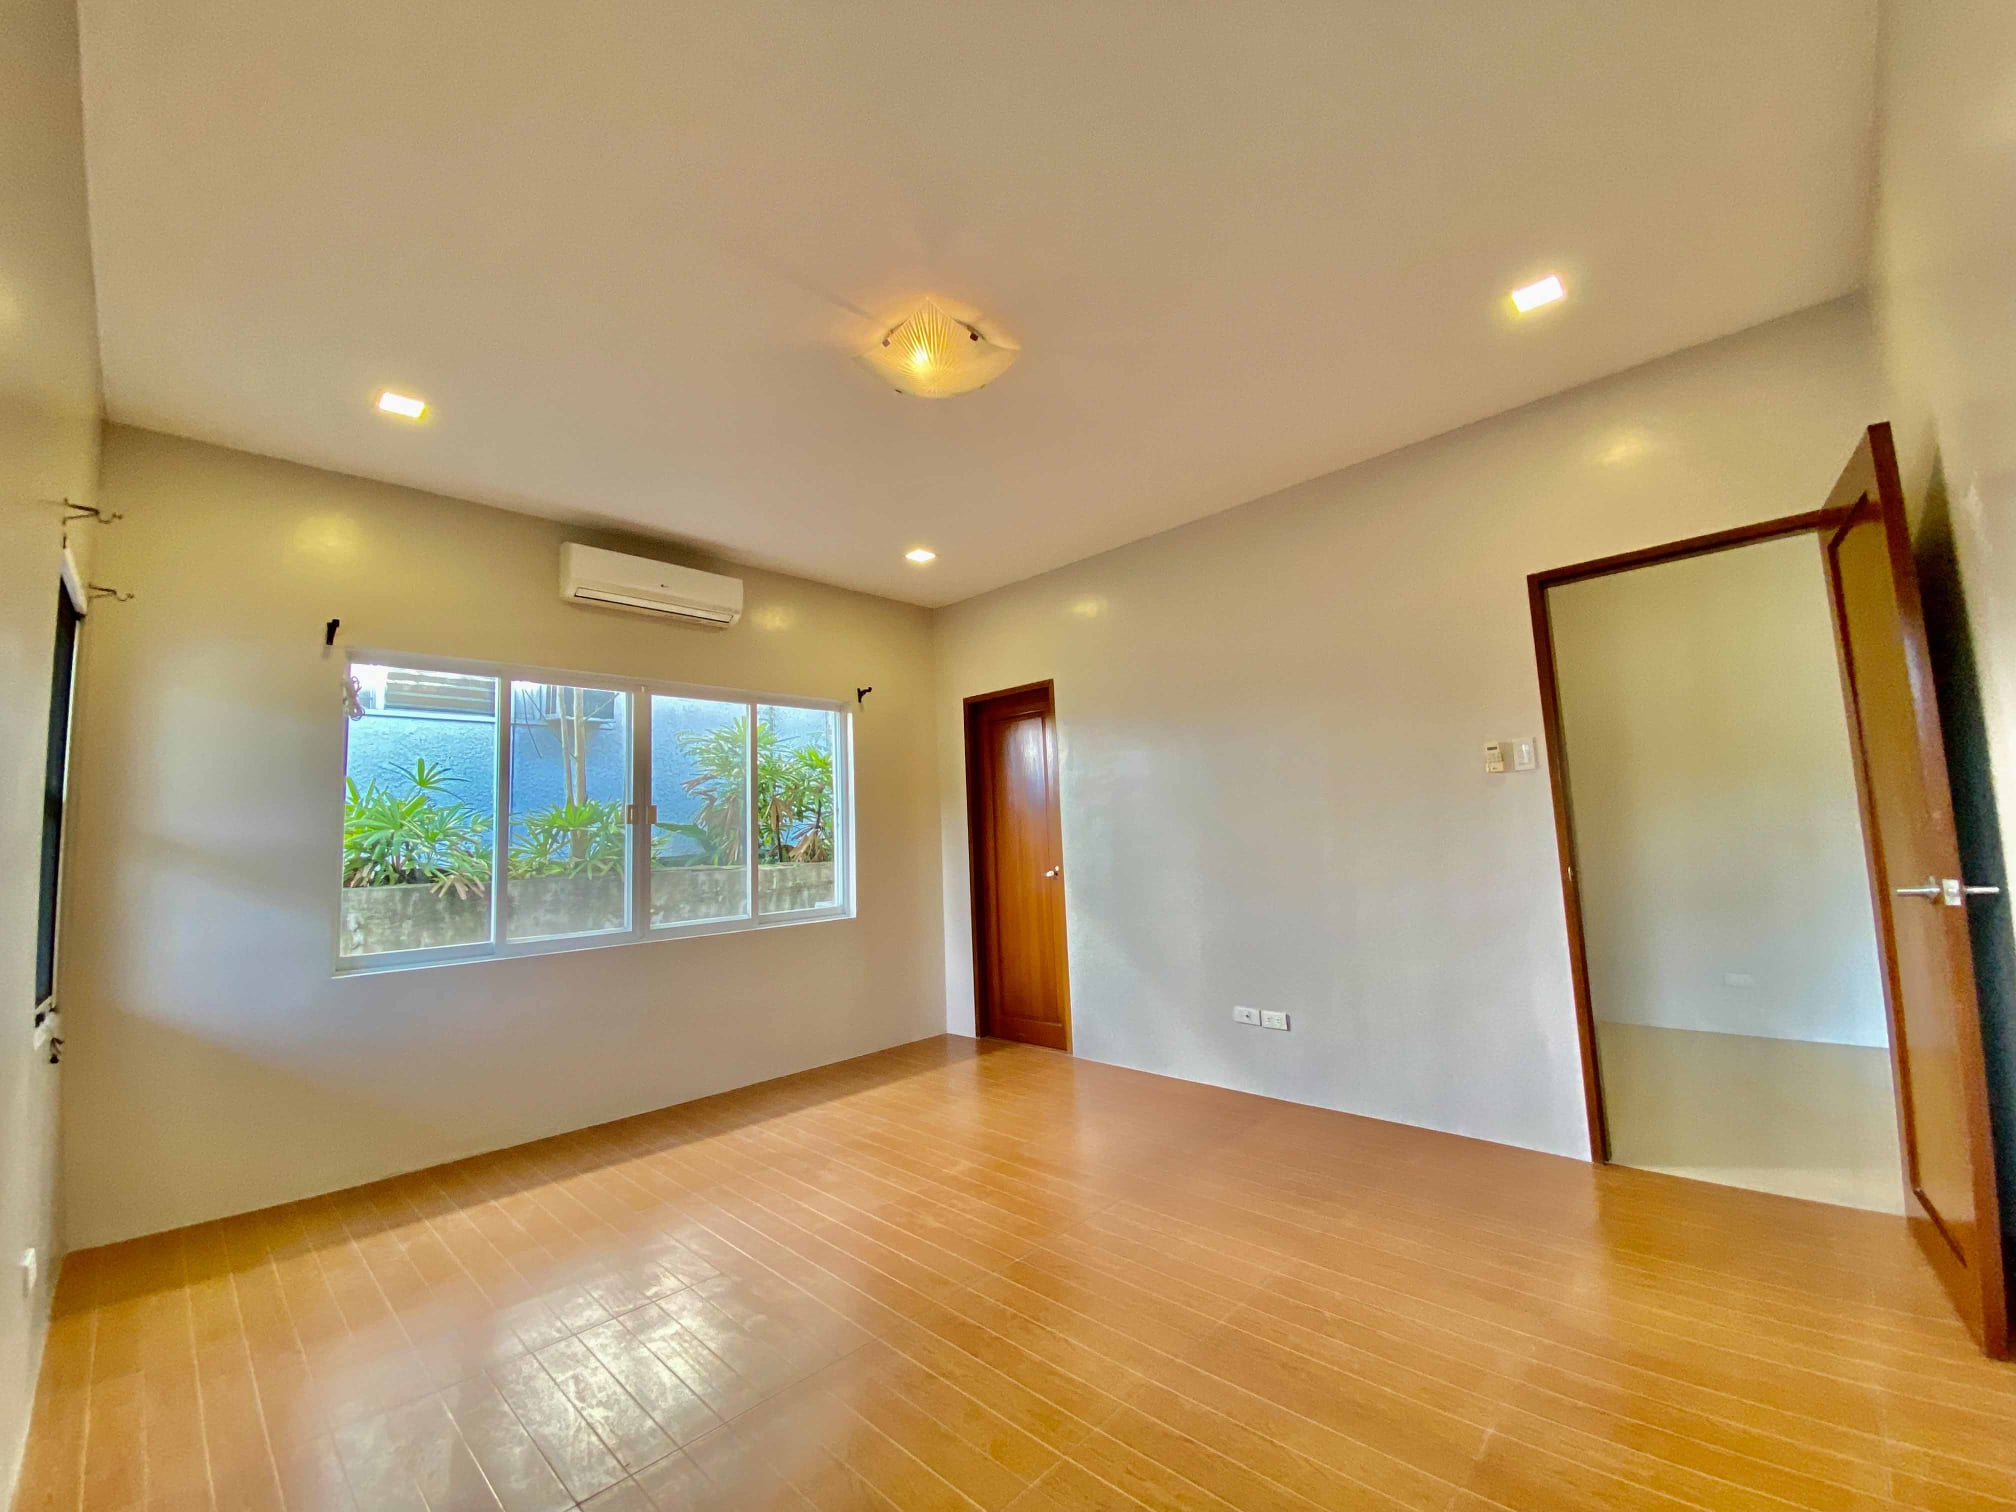 bungalow-house-4-bedroom-for-rent-in-banilad-cebu-city-unfurnished